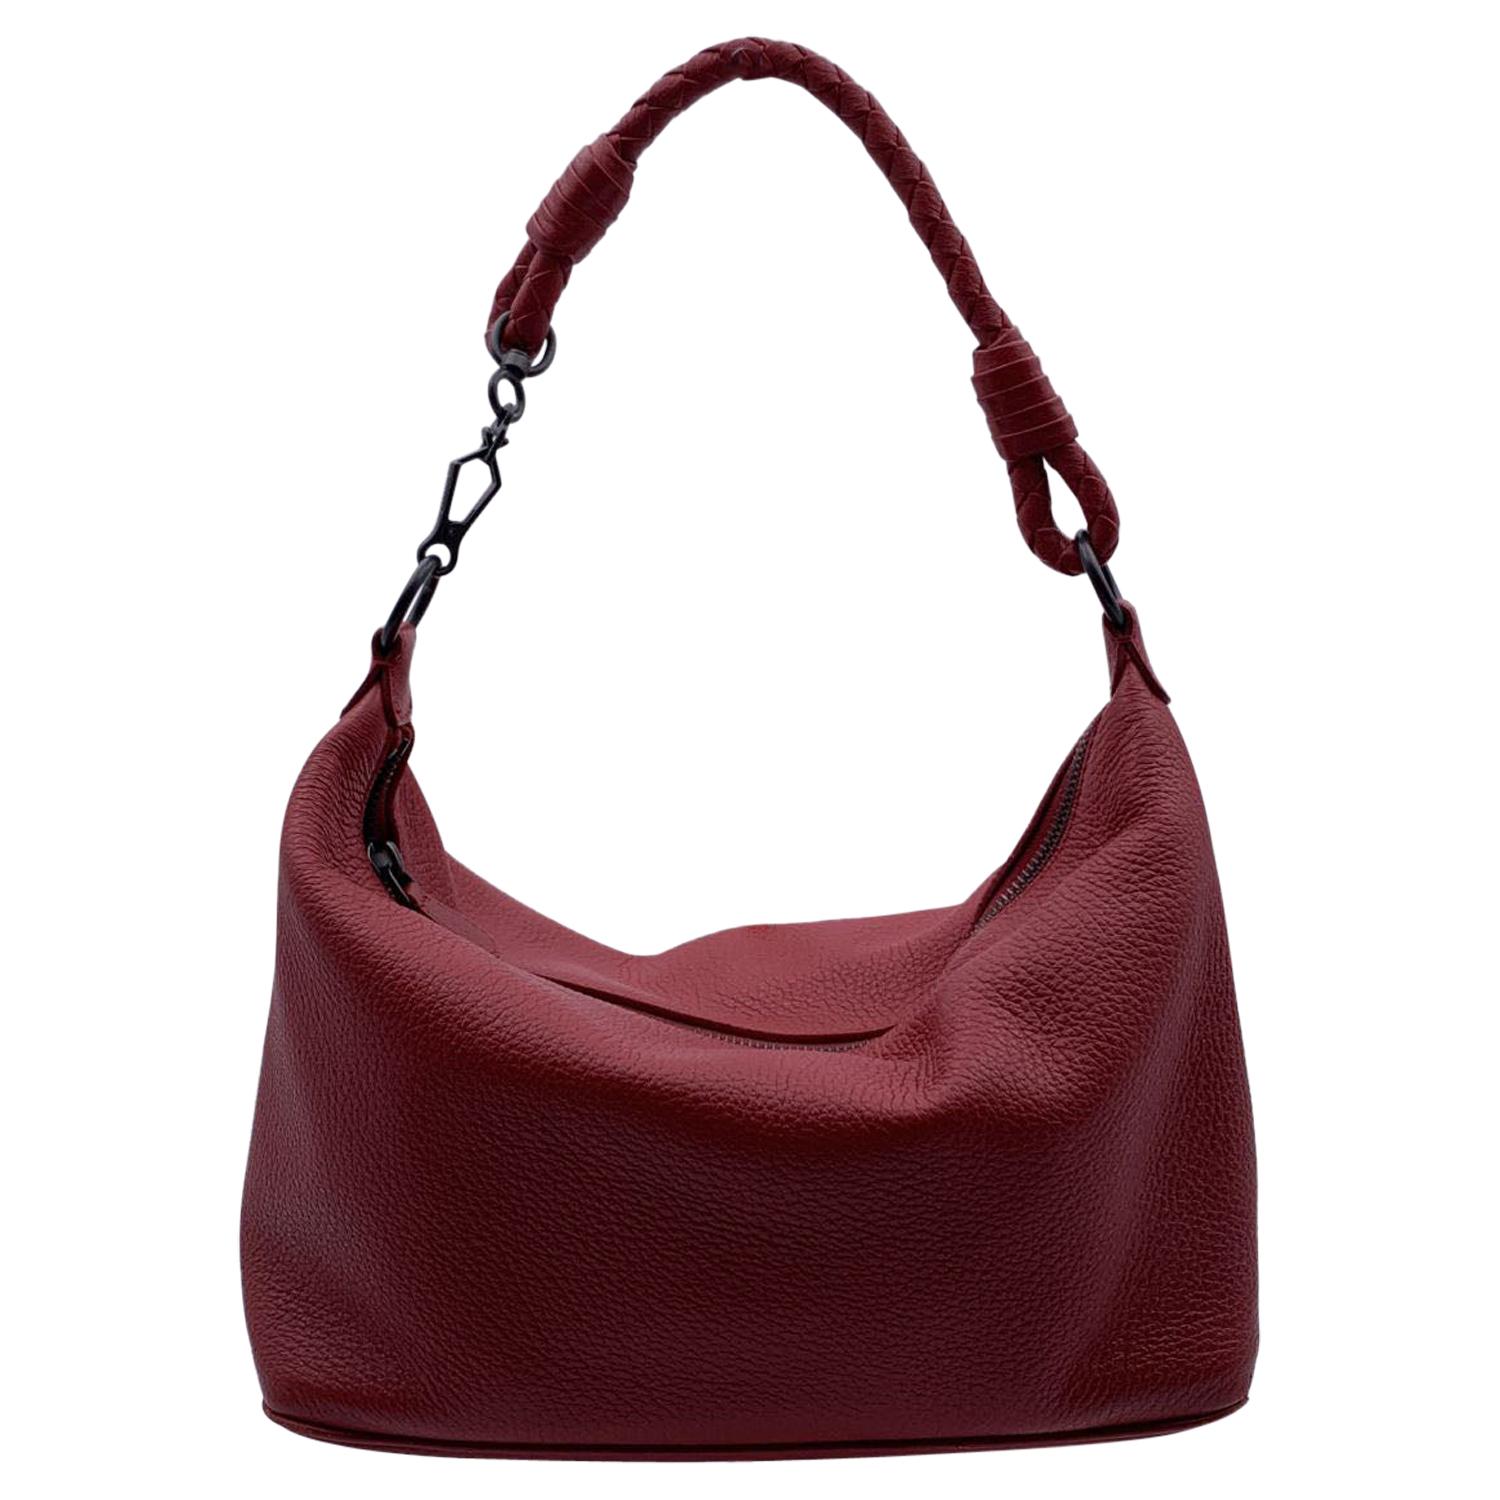 Bottega Veneta Red Leather Hobo Shoulder Bag Tote